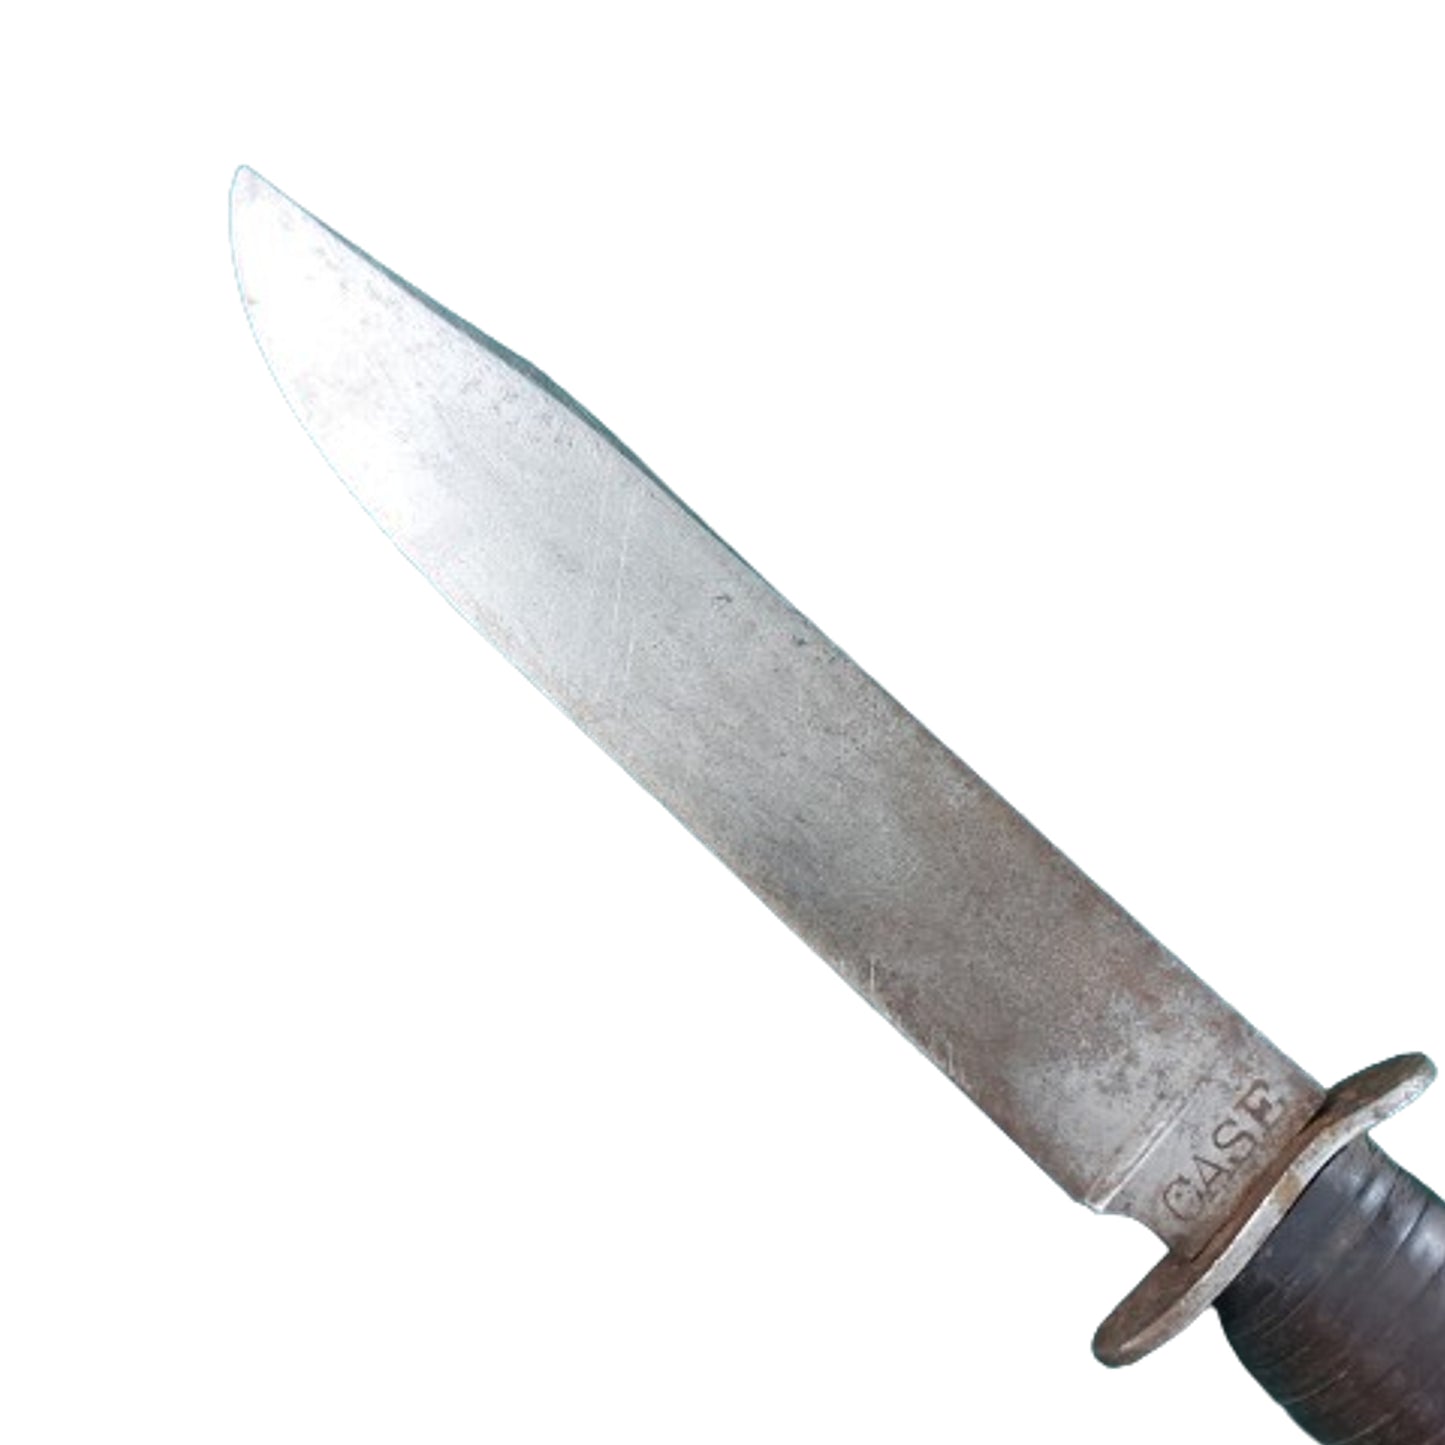 Named WW2 M3 Knife And Case Knife In Scabbards -Adak Kiska Service